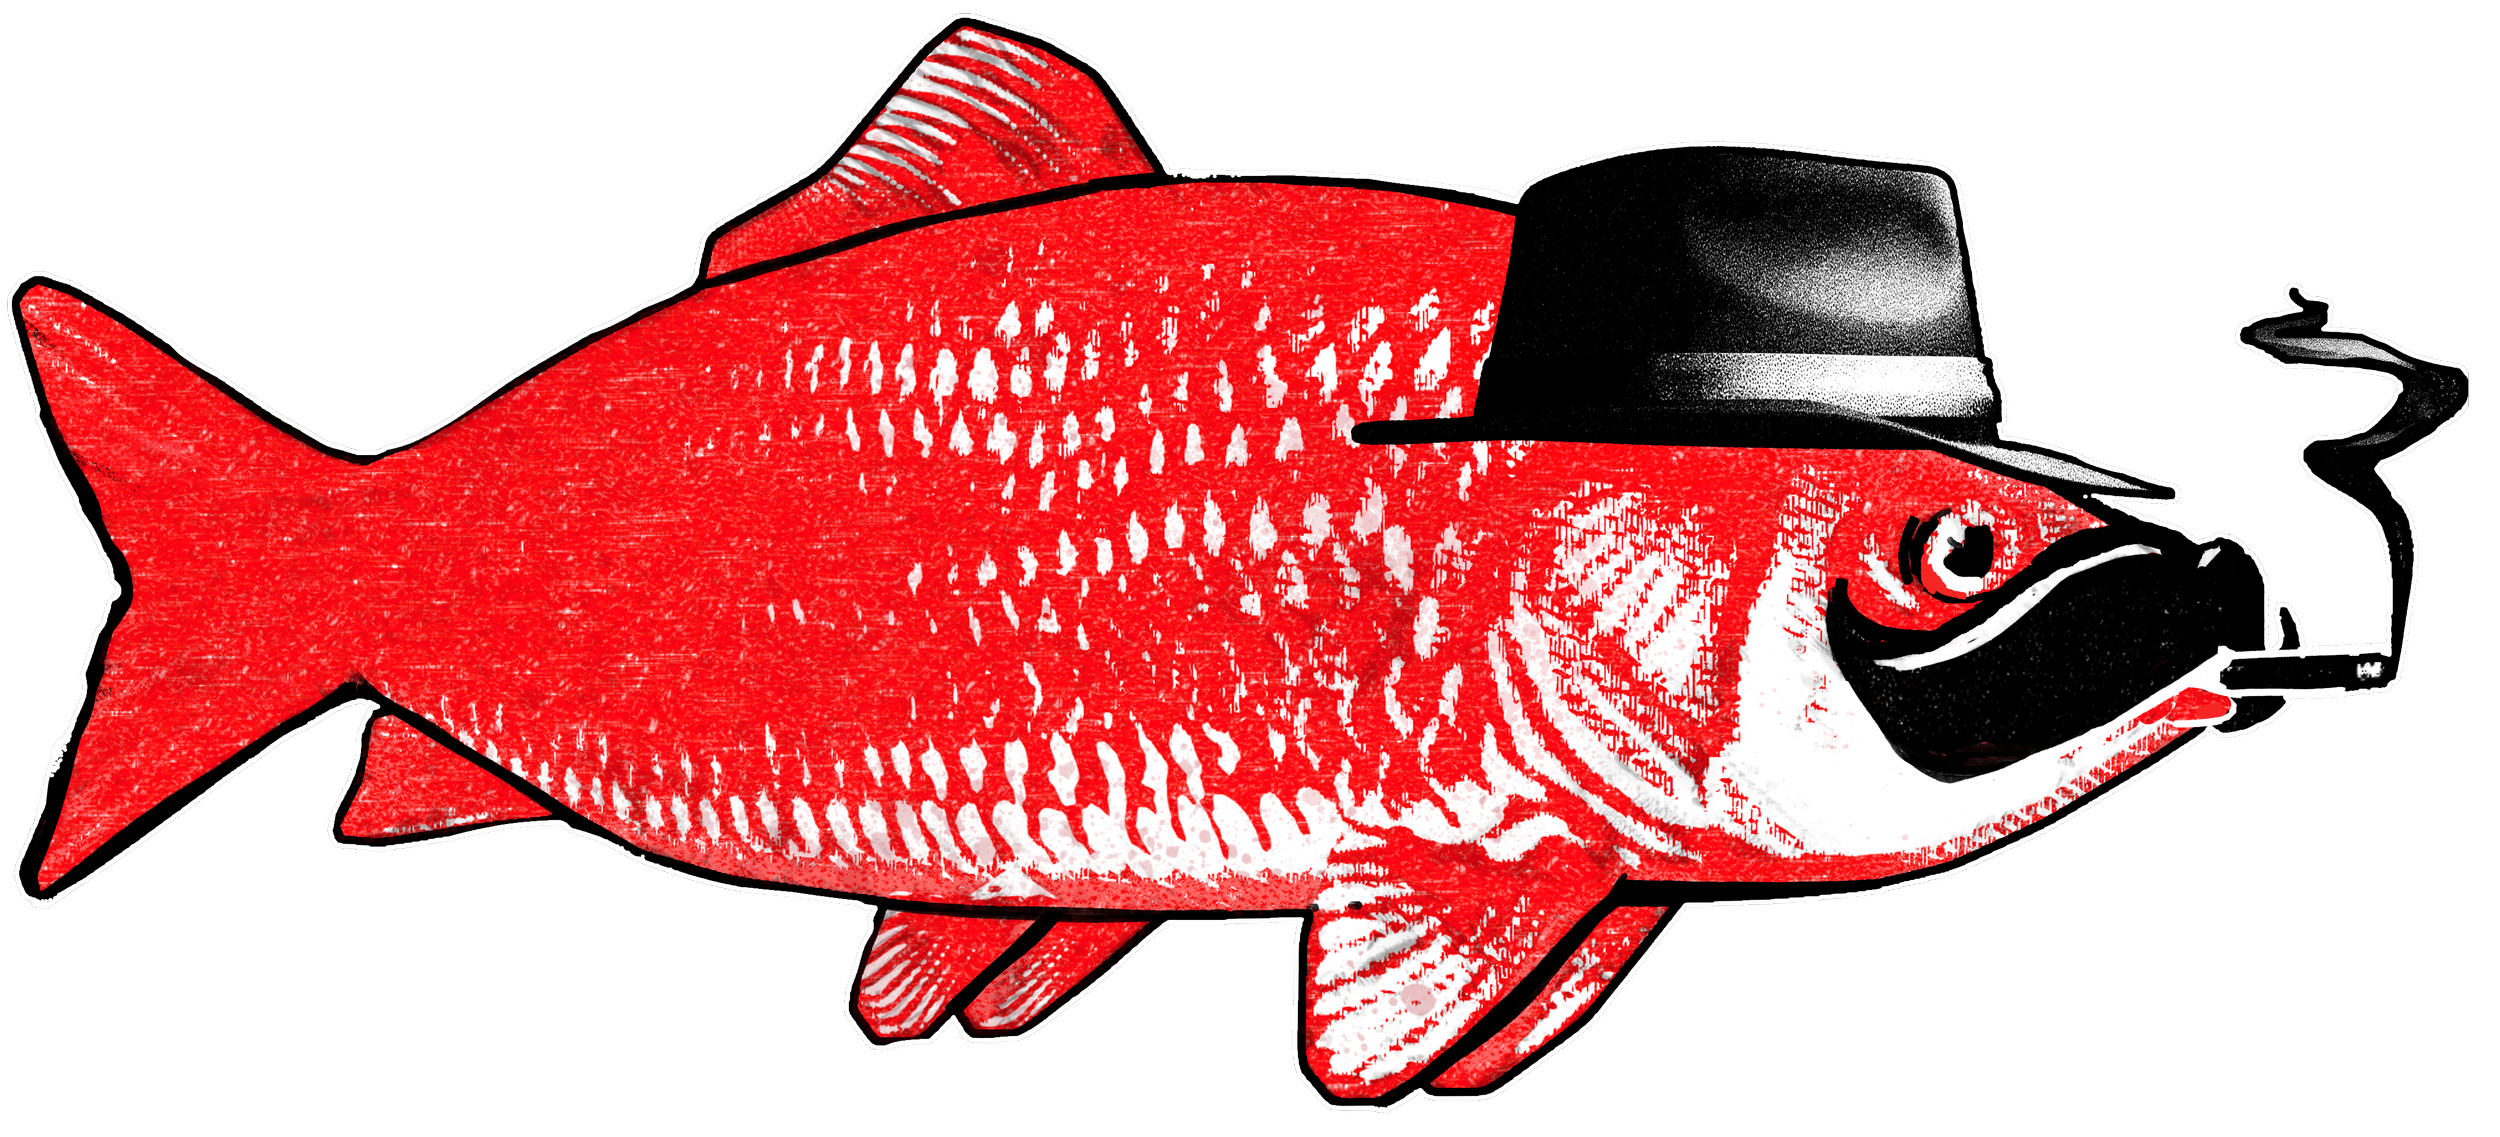 Red herring